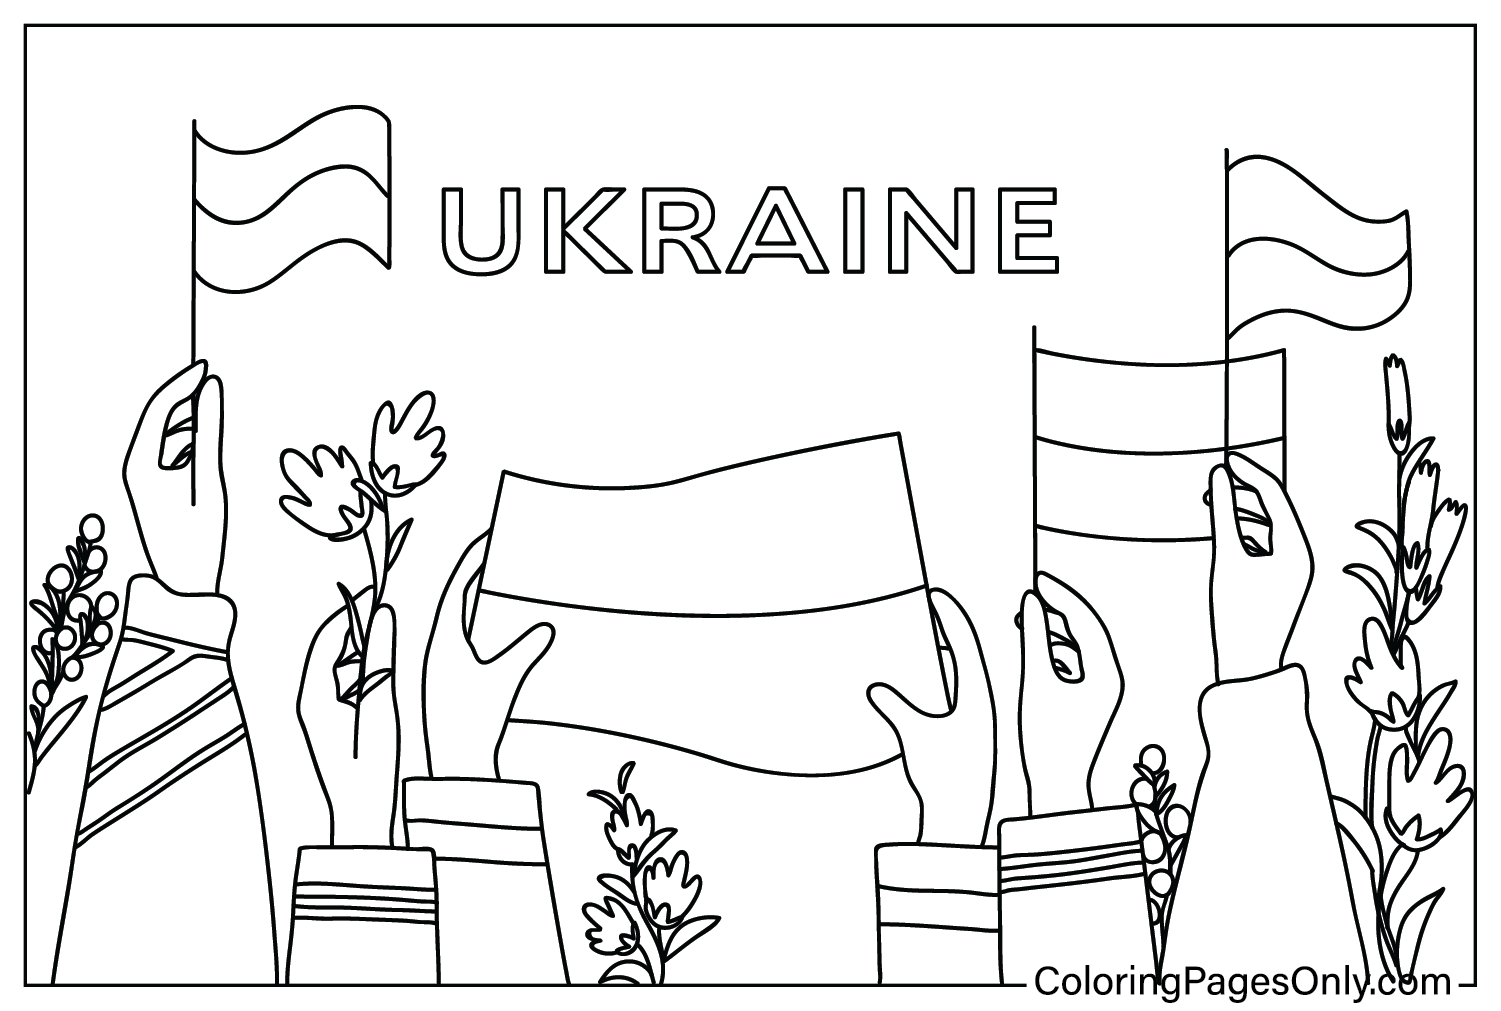 Dibujo para colorear de Ucrania imprimir gratis